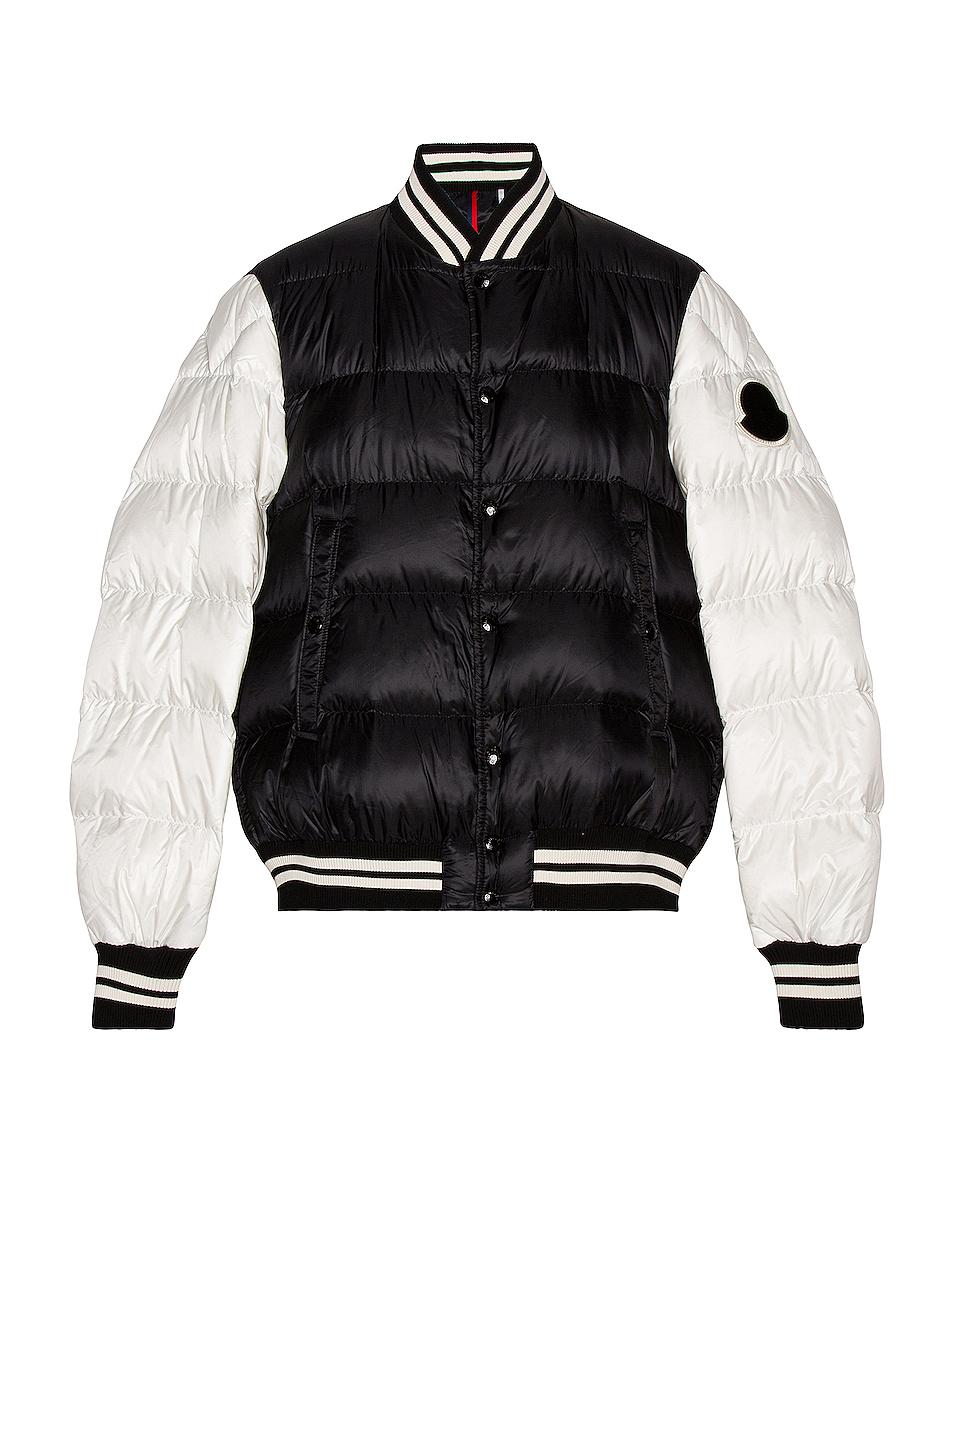 Moncler Synthetic Beaufortain Bomber Puffer Jacket in Black & White (Black)  for Men | Lyst